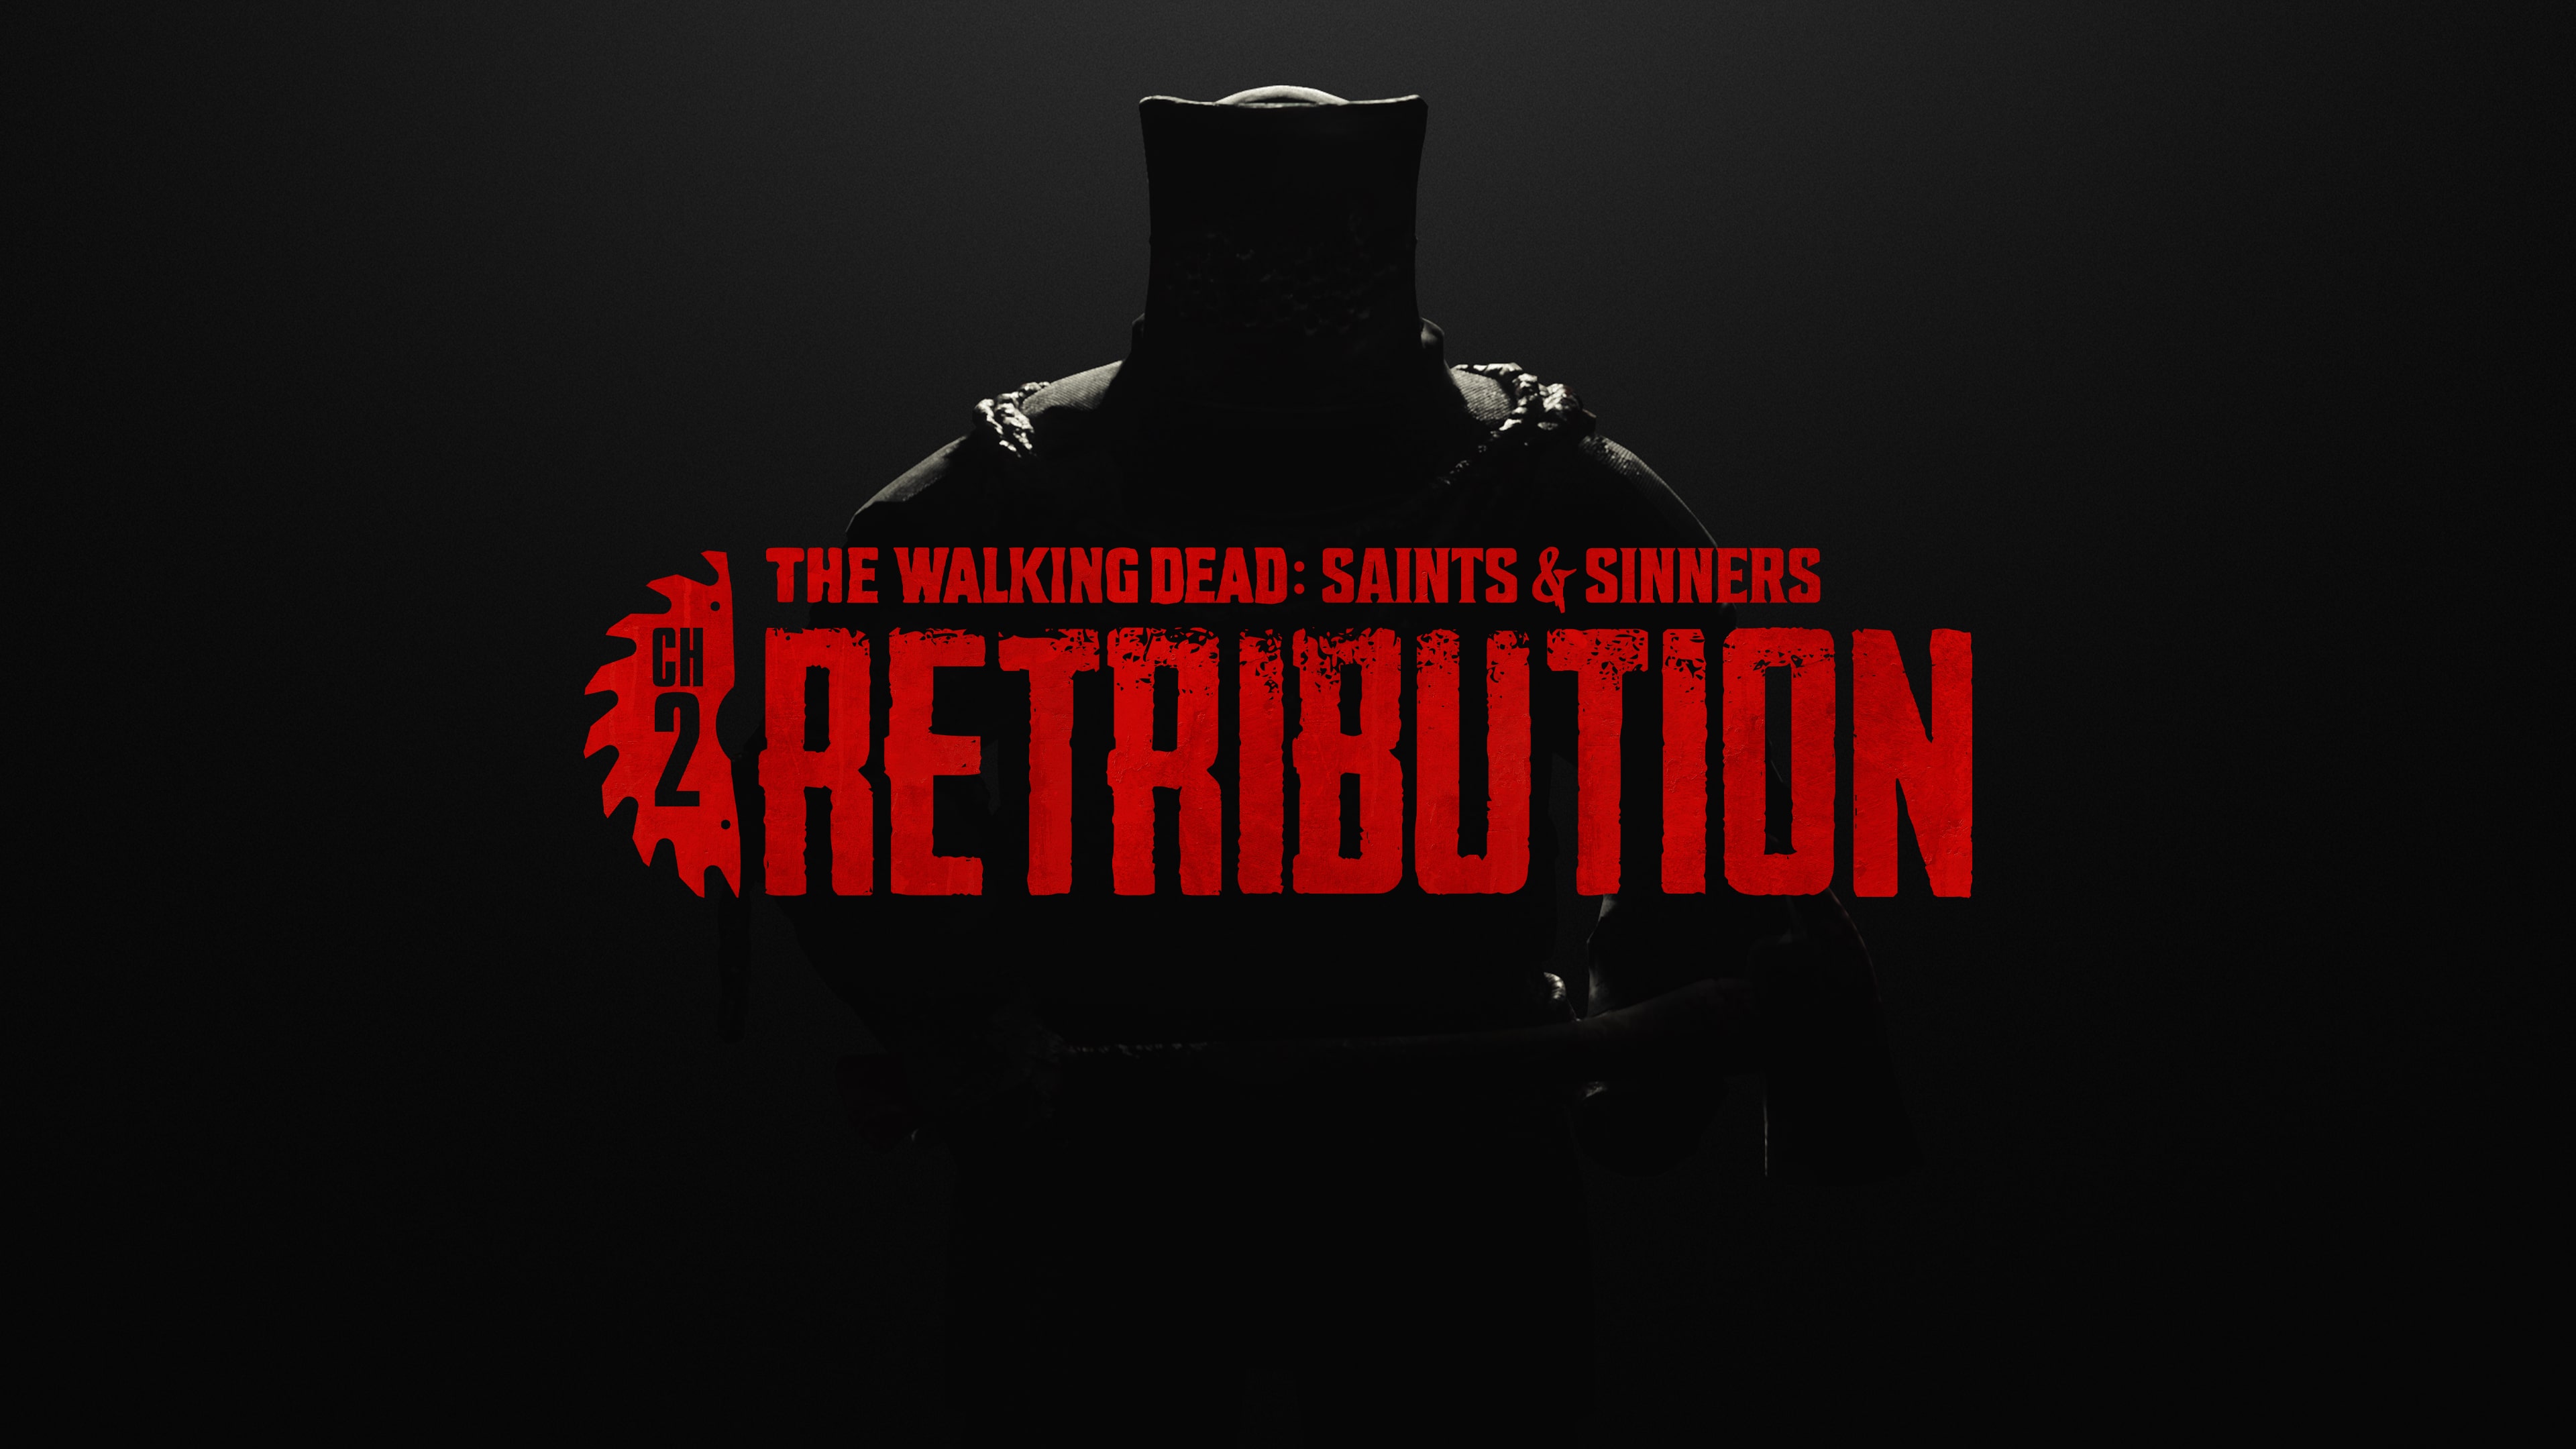 The Walking Dead: Saints & Sinners - Chapter 2: Retribution (English/Chinese/Korean/Japanese Ver.)